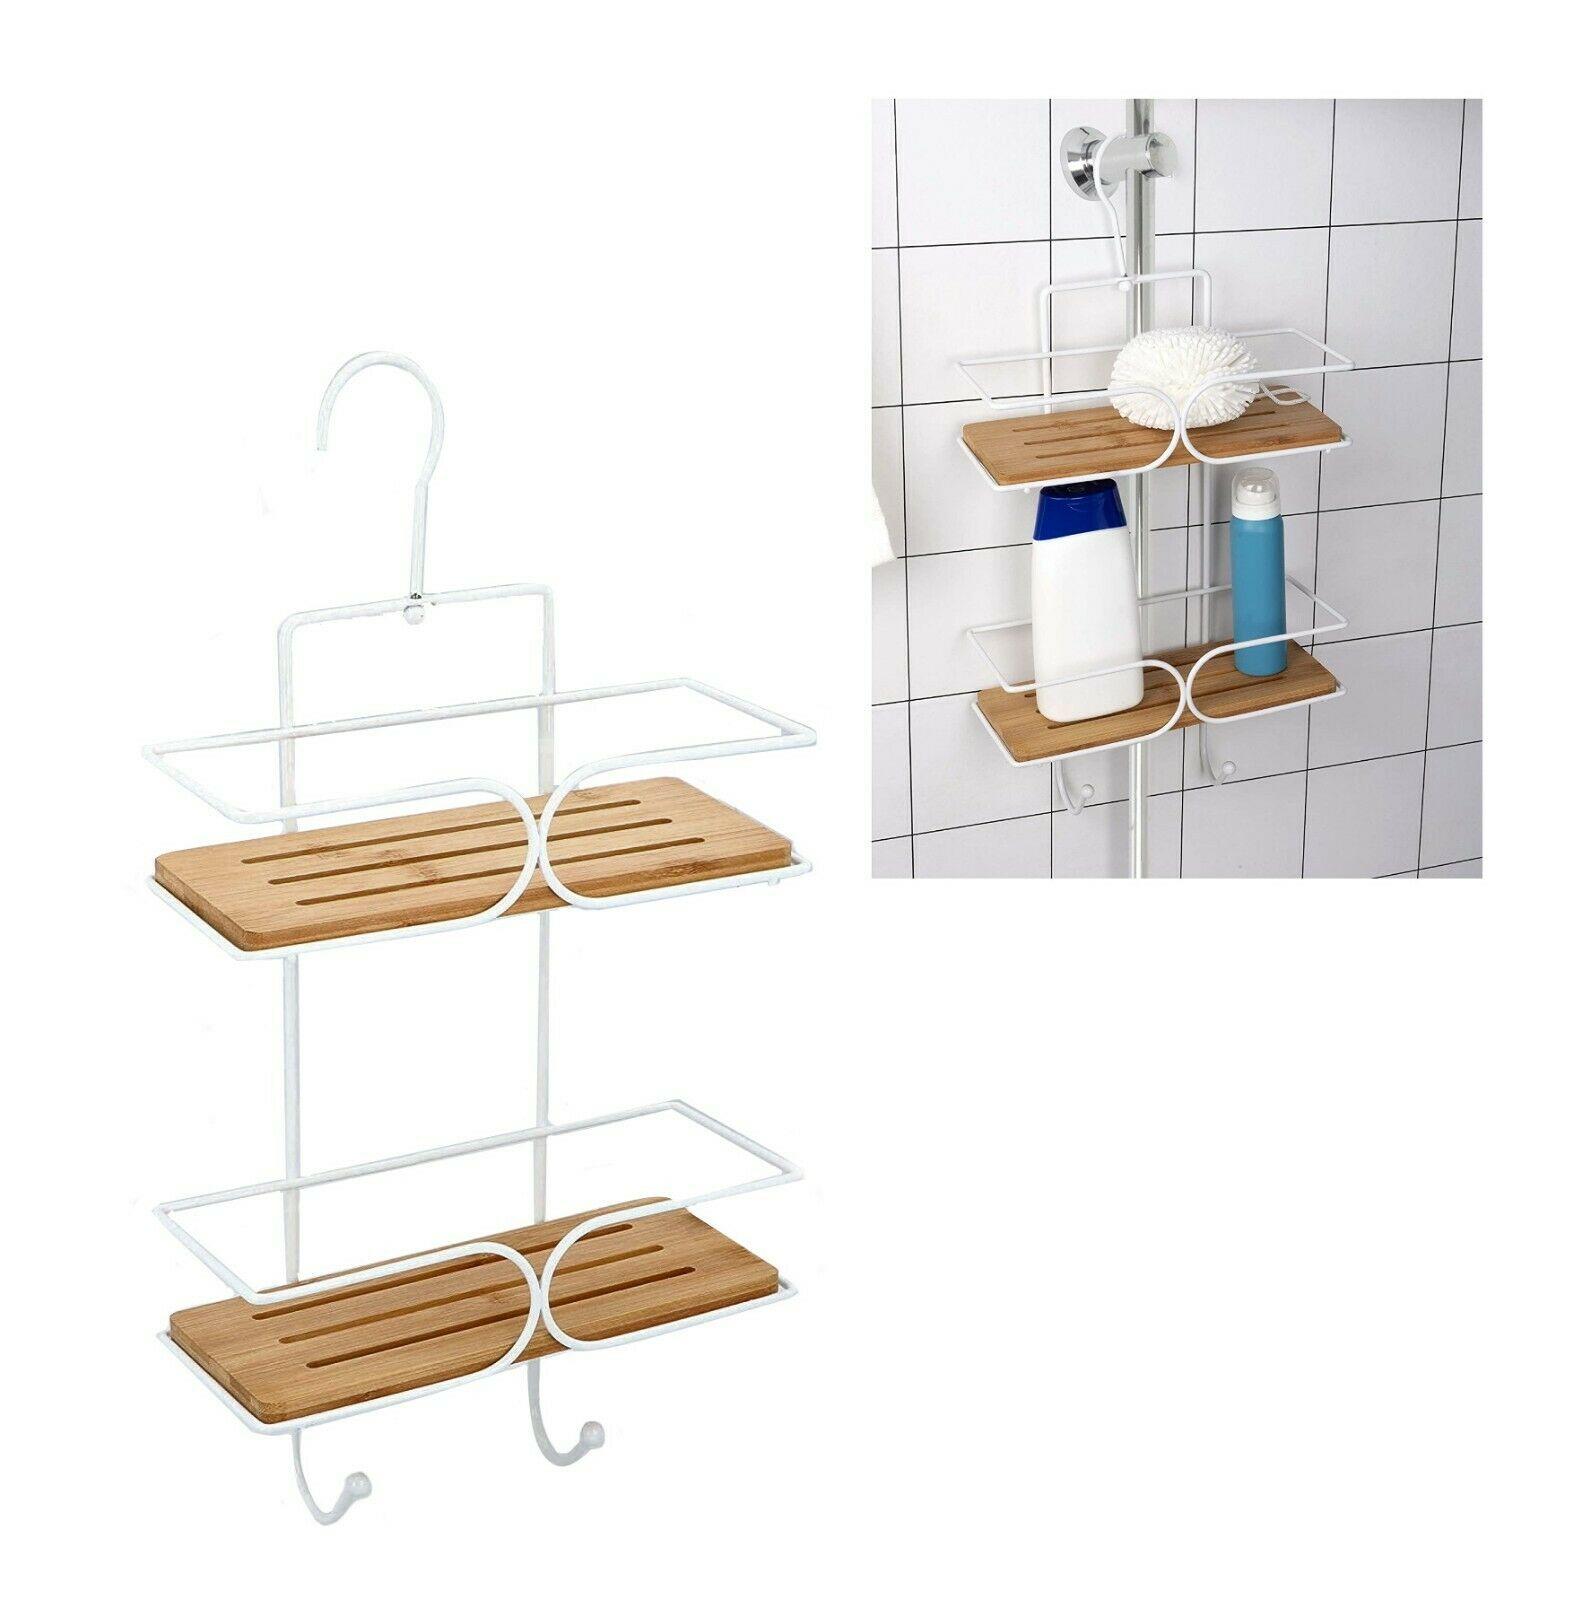 Details about   Wall Shower Caddy Corner Storage Holder Rack Organiser Bathroom Self-Adhesive 